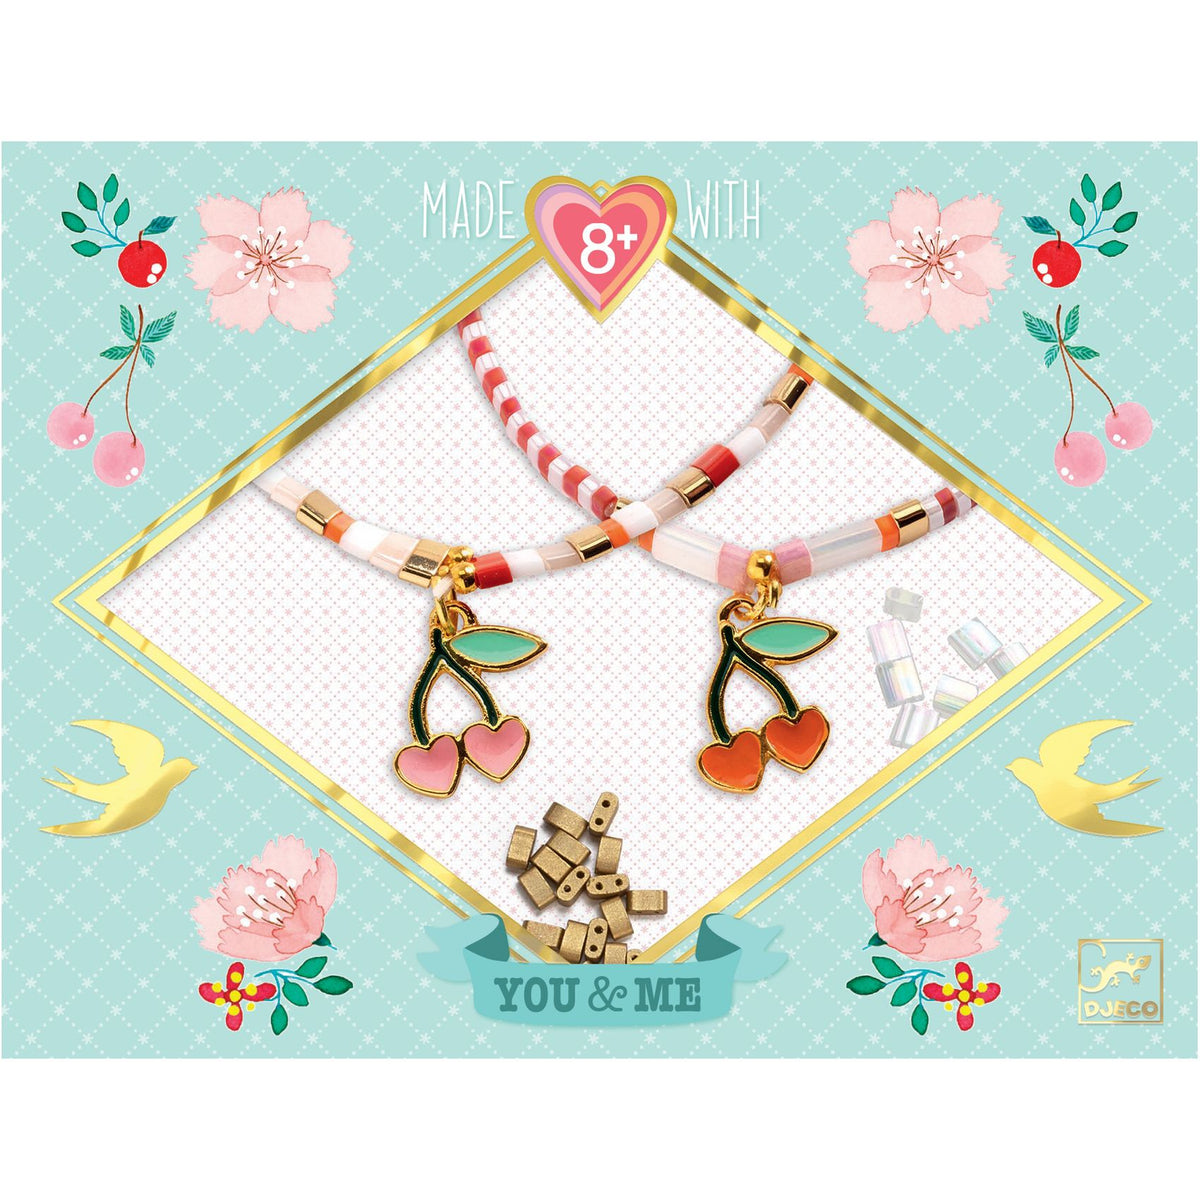 Tila & Cherries Jewelry Making Kit Cover